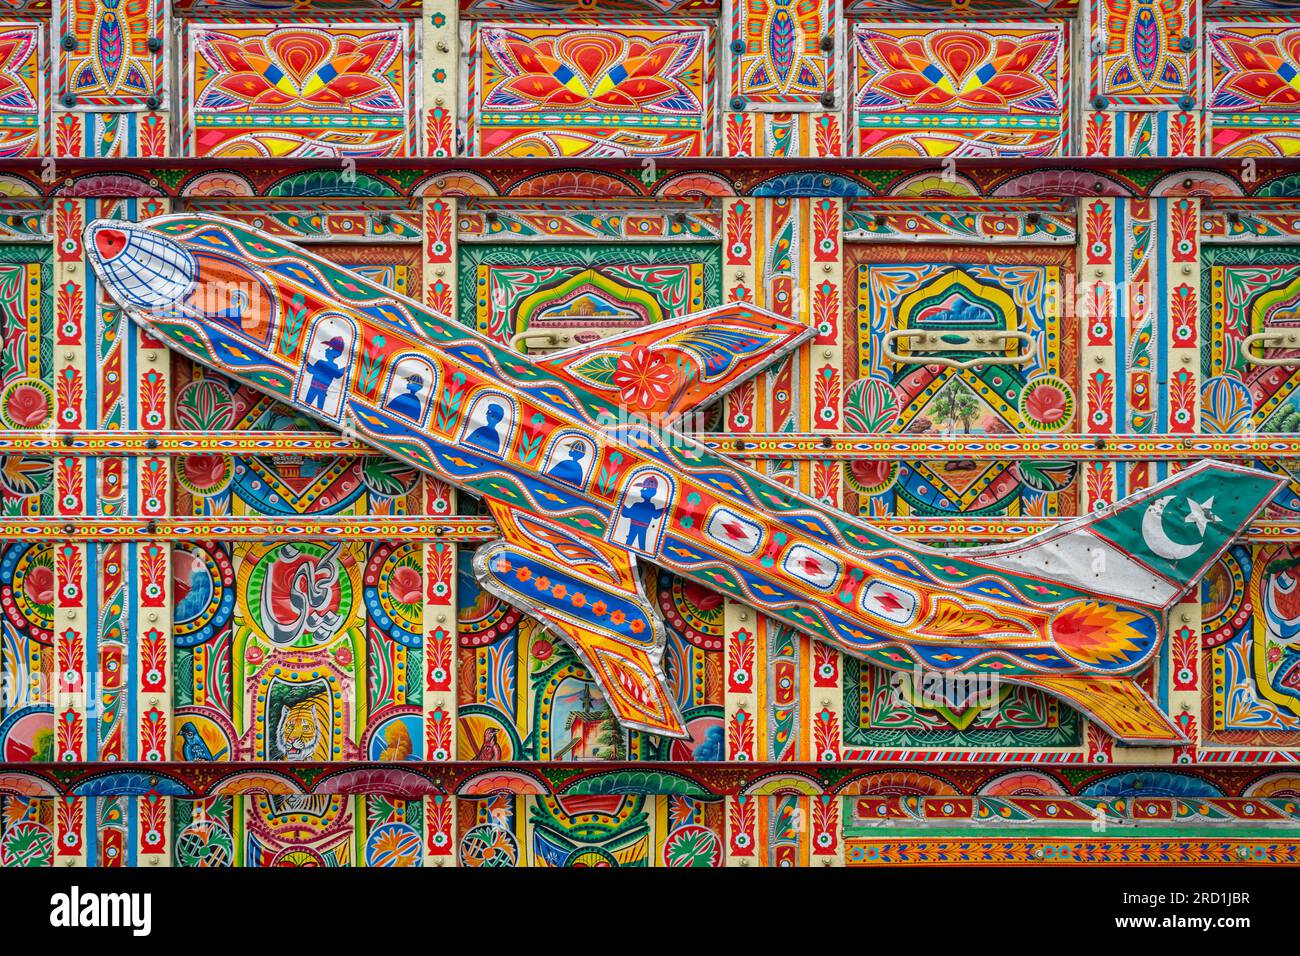 Punjab, Pakistan - 11 07 2019 : farbenfrohe Nahaufnahme der LKW-Kunstmalerei eines Flugzeugs Stockfoto